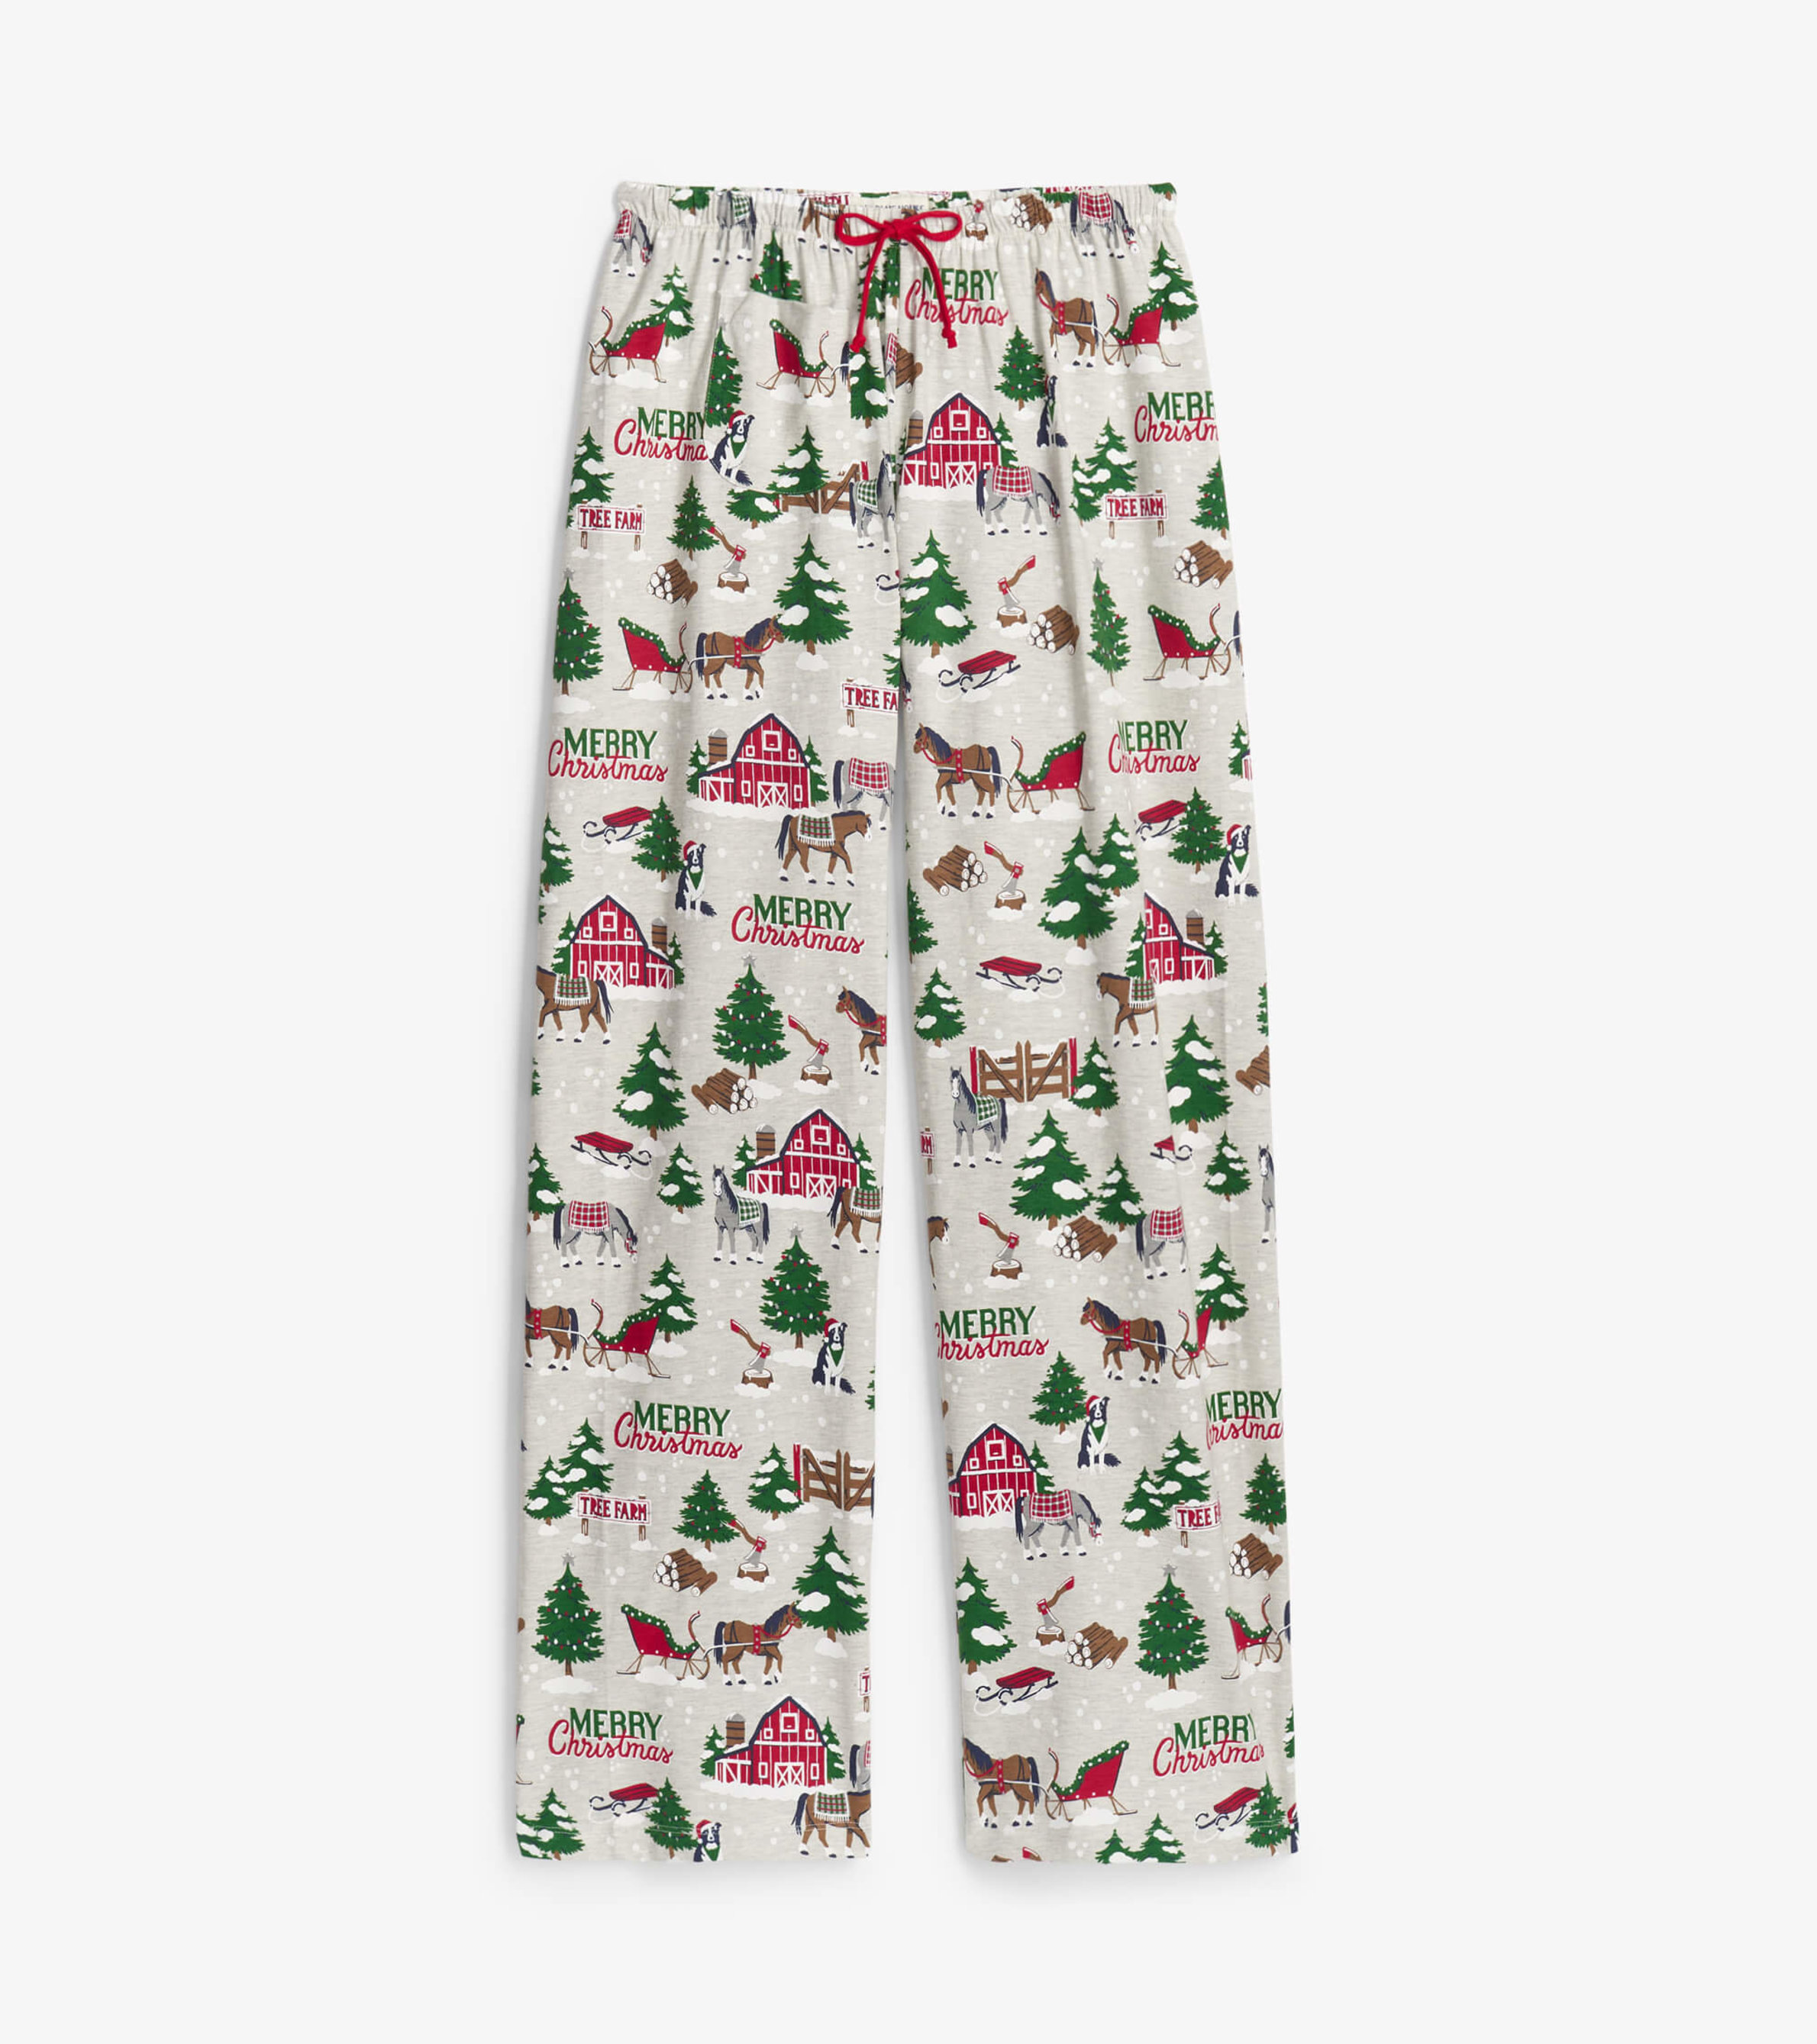 Pisexur Classic Plaid Family Christmas Pajamas Sets Long Sleeve Crewneck  Holiday Christmastree Top Green Plaid Pants 2PCS Christmas Pjs Lounge Sets  